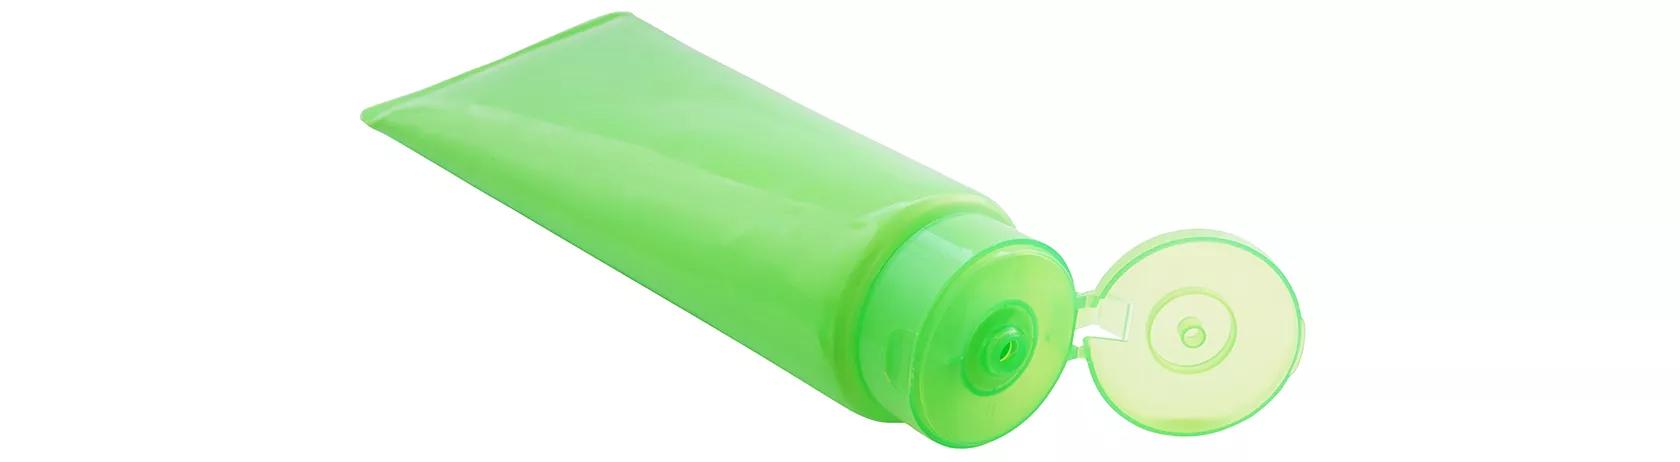 Grüne Plastiktube mit offenem Filmscharnier-Deckel